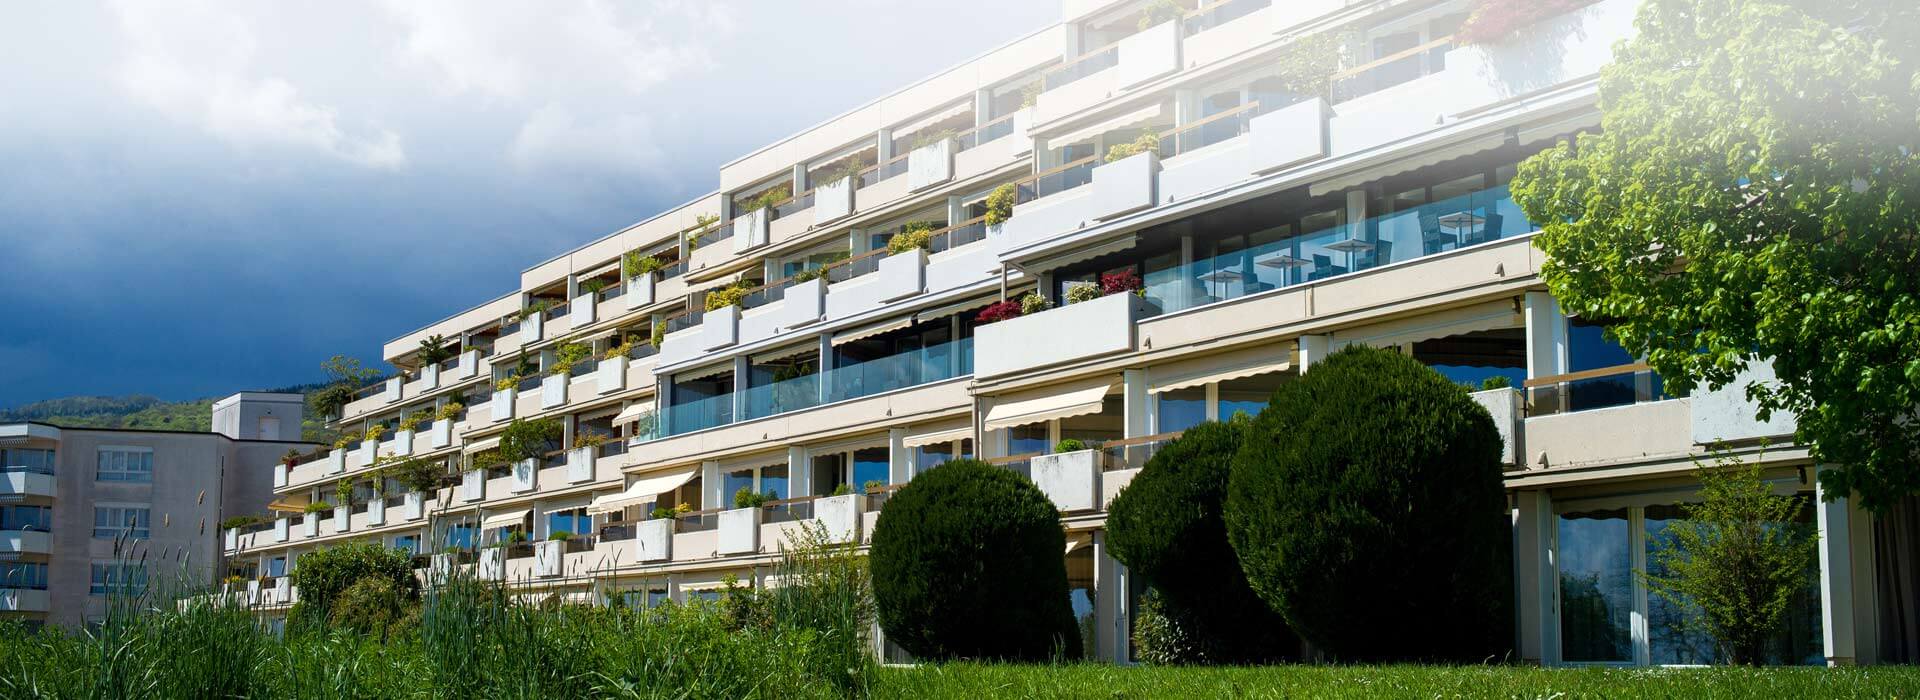 Patient Apartments Genolier Cliinic Geneva